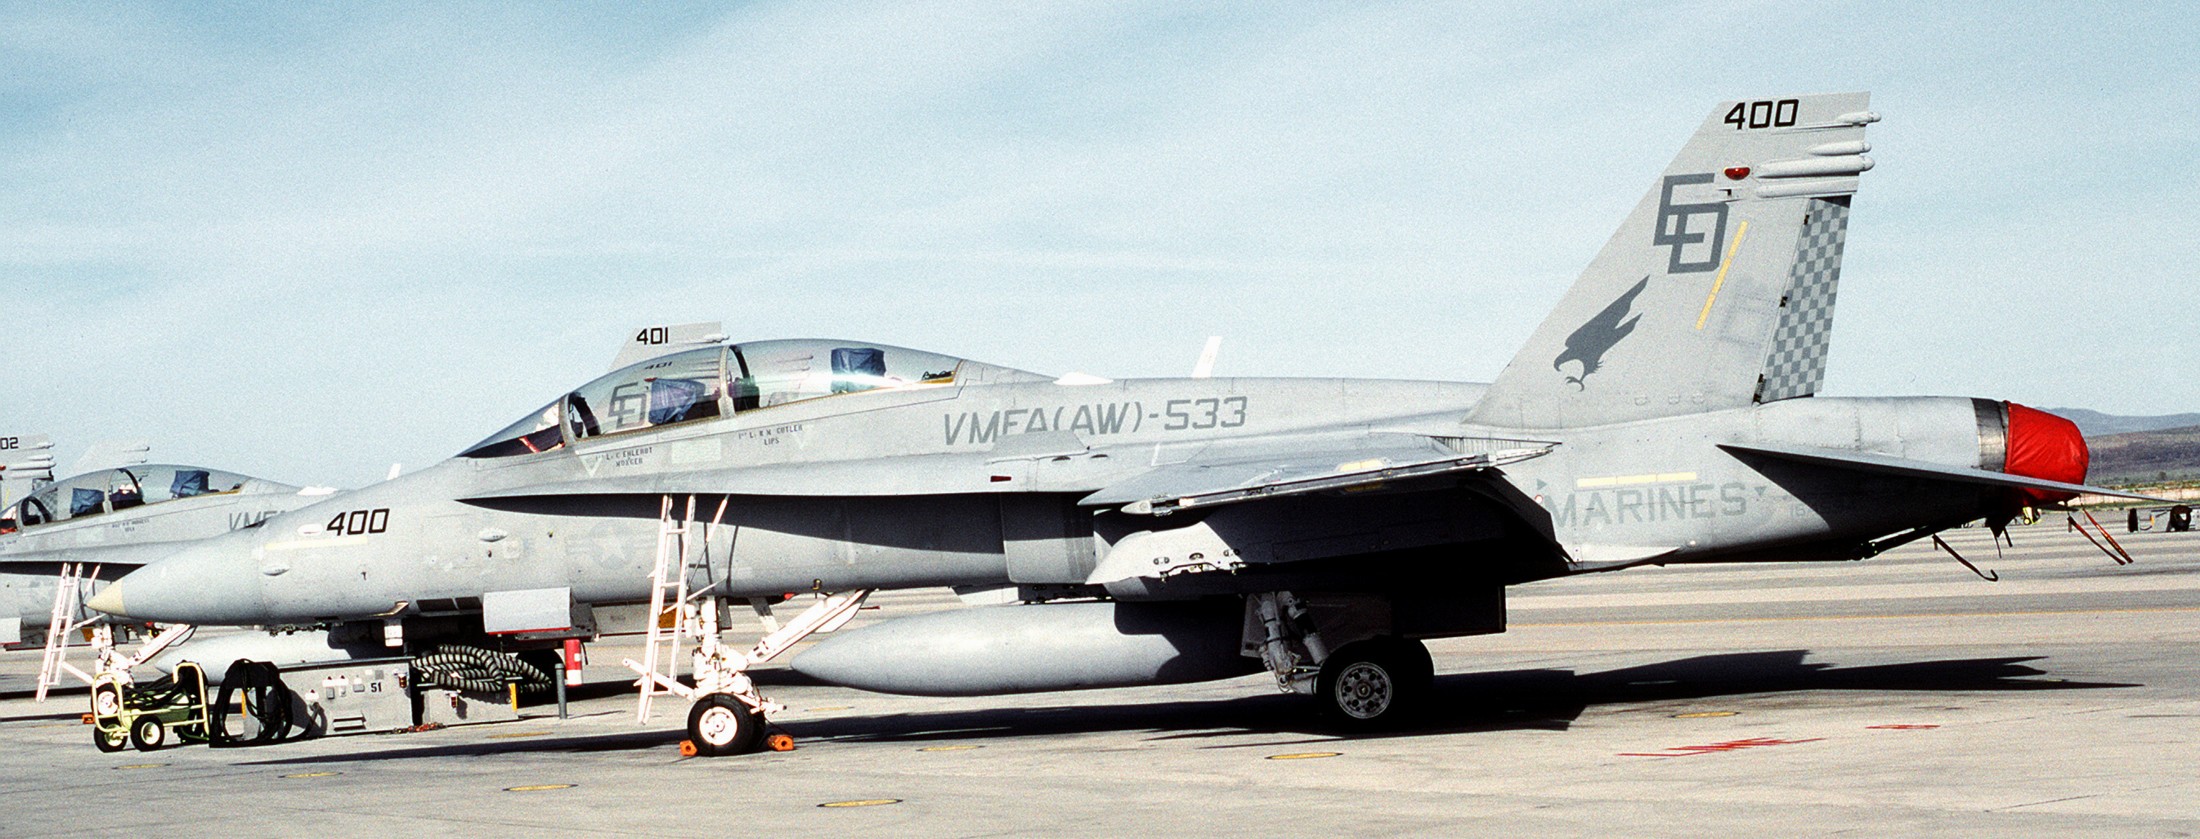 vmfa(aw)-533 hawks marine fighter attack squadron usmc f/a-18d hornet 93 nas fallon nevada